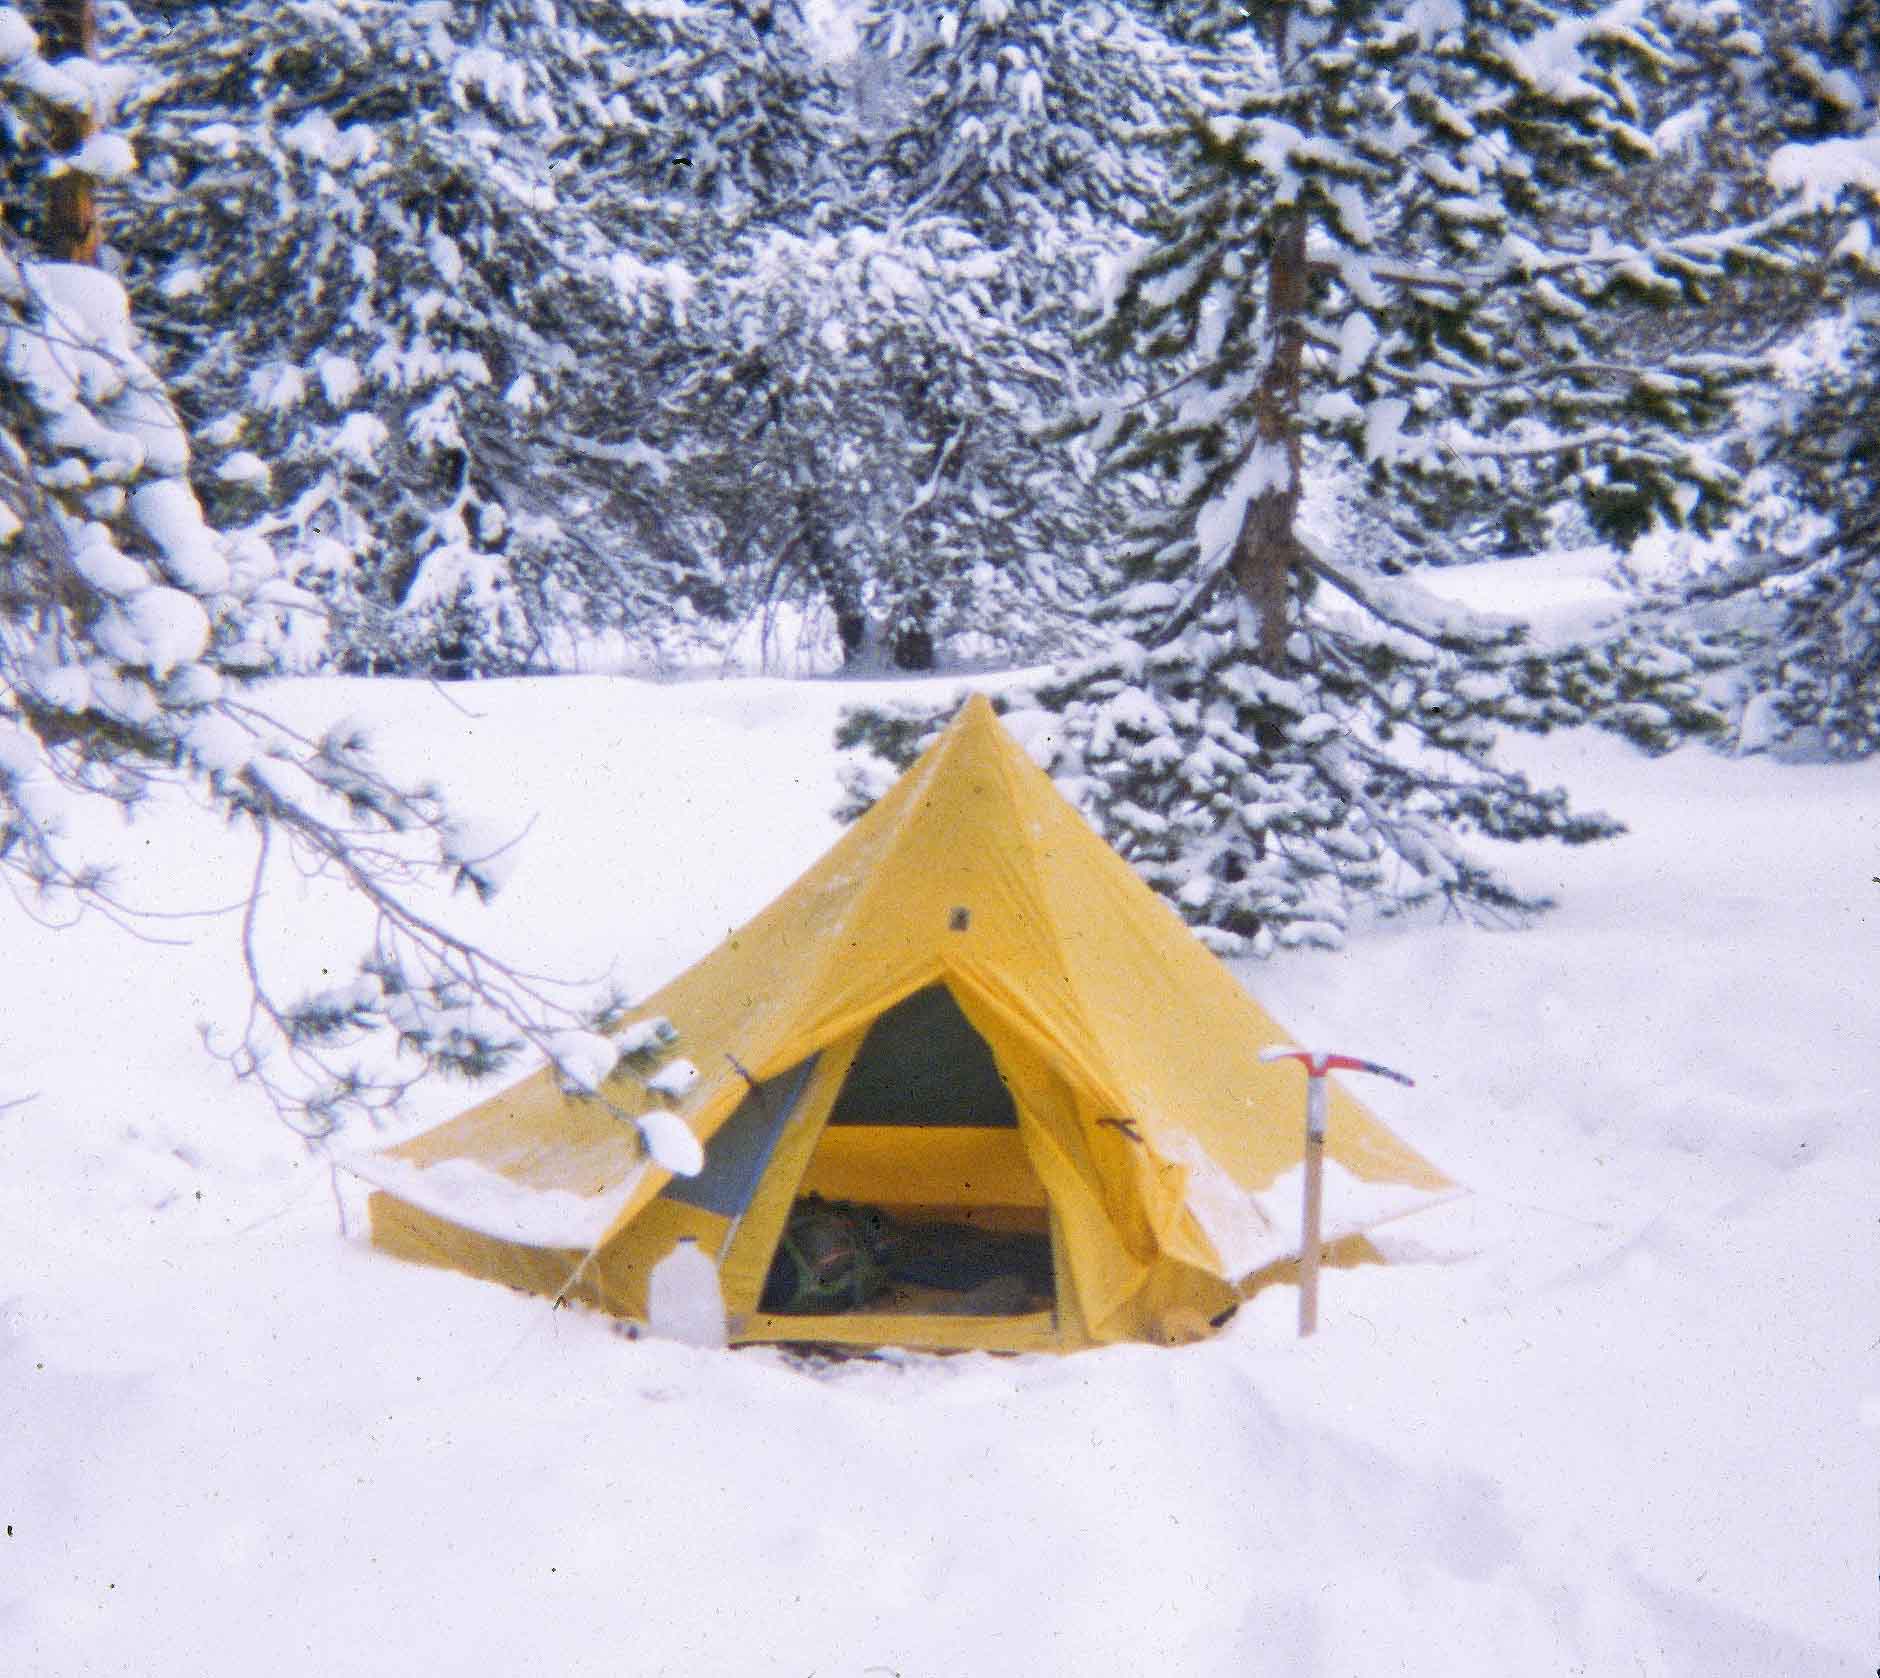  Striders  Sierra Designs Starlite Tent After A Snowy Night